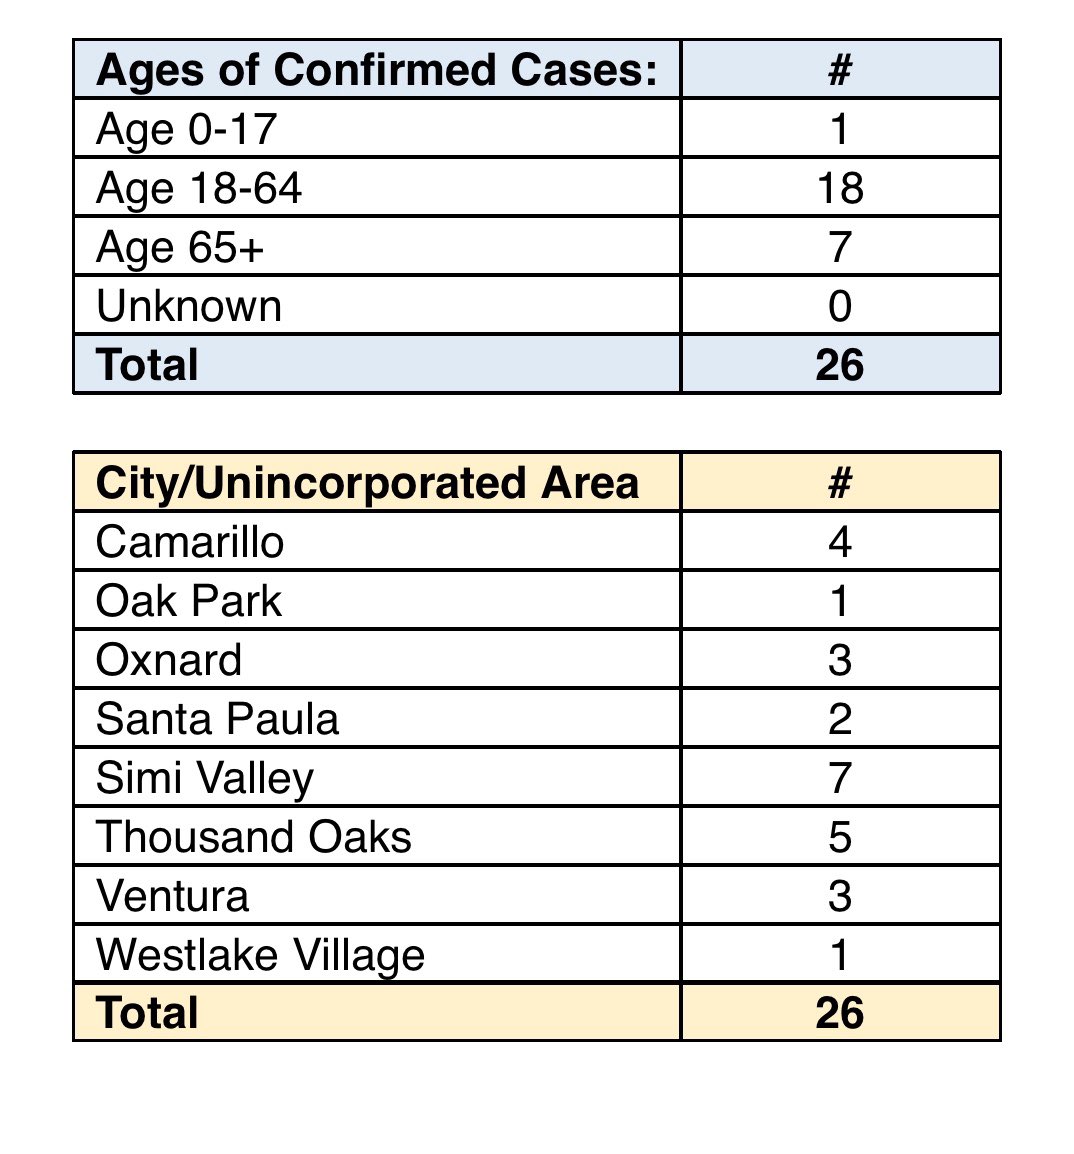 City breakdown of COVID-19 cases in Ventura County. Image courtesy of Ventura County.